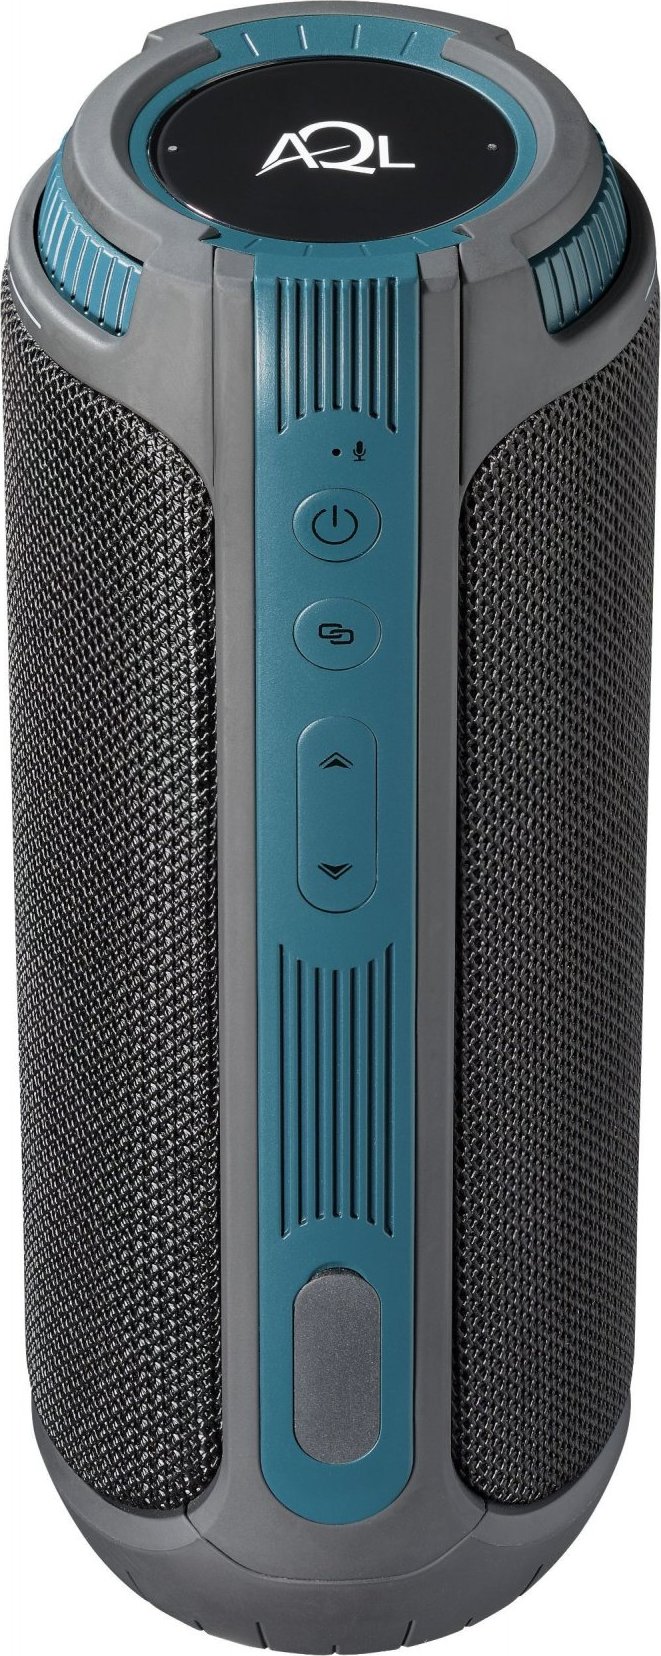 Bezdrátový voděodolný reproduktor CellularLine Twister, 360° zvuk 20 W, AQL® certifikace, černý